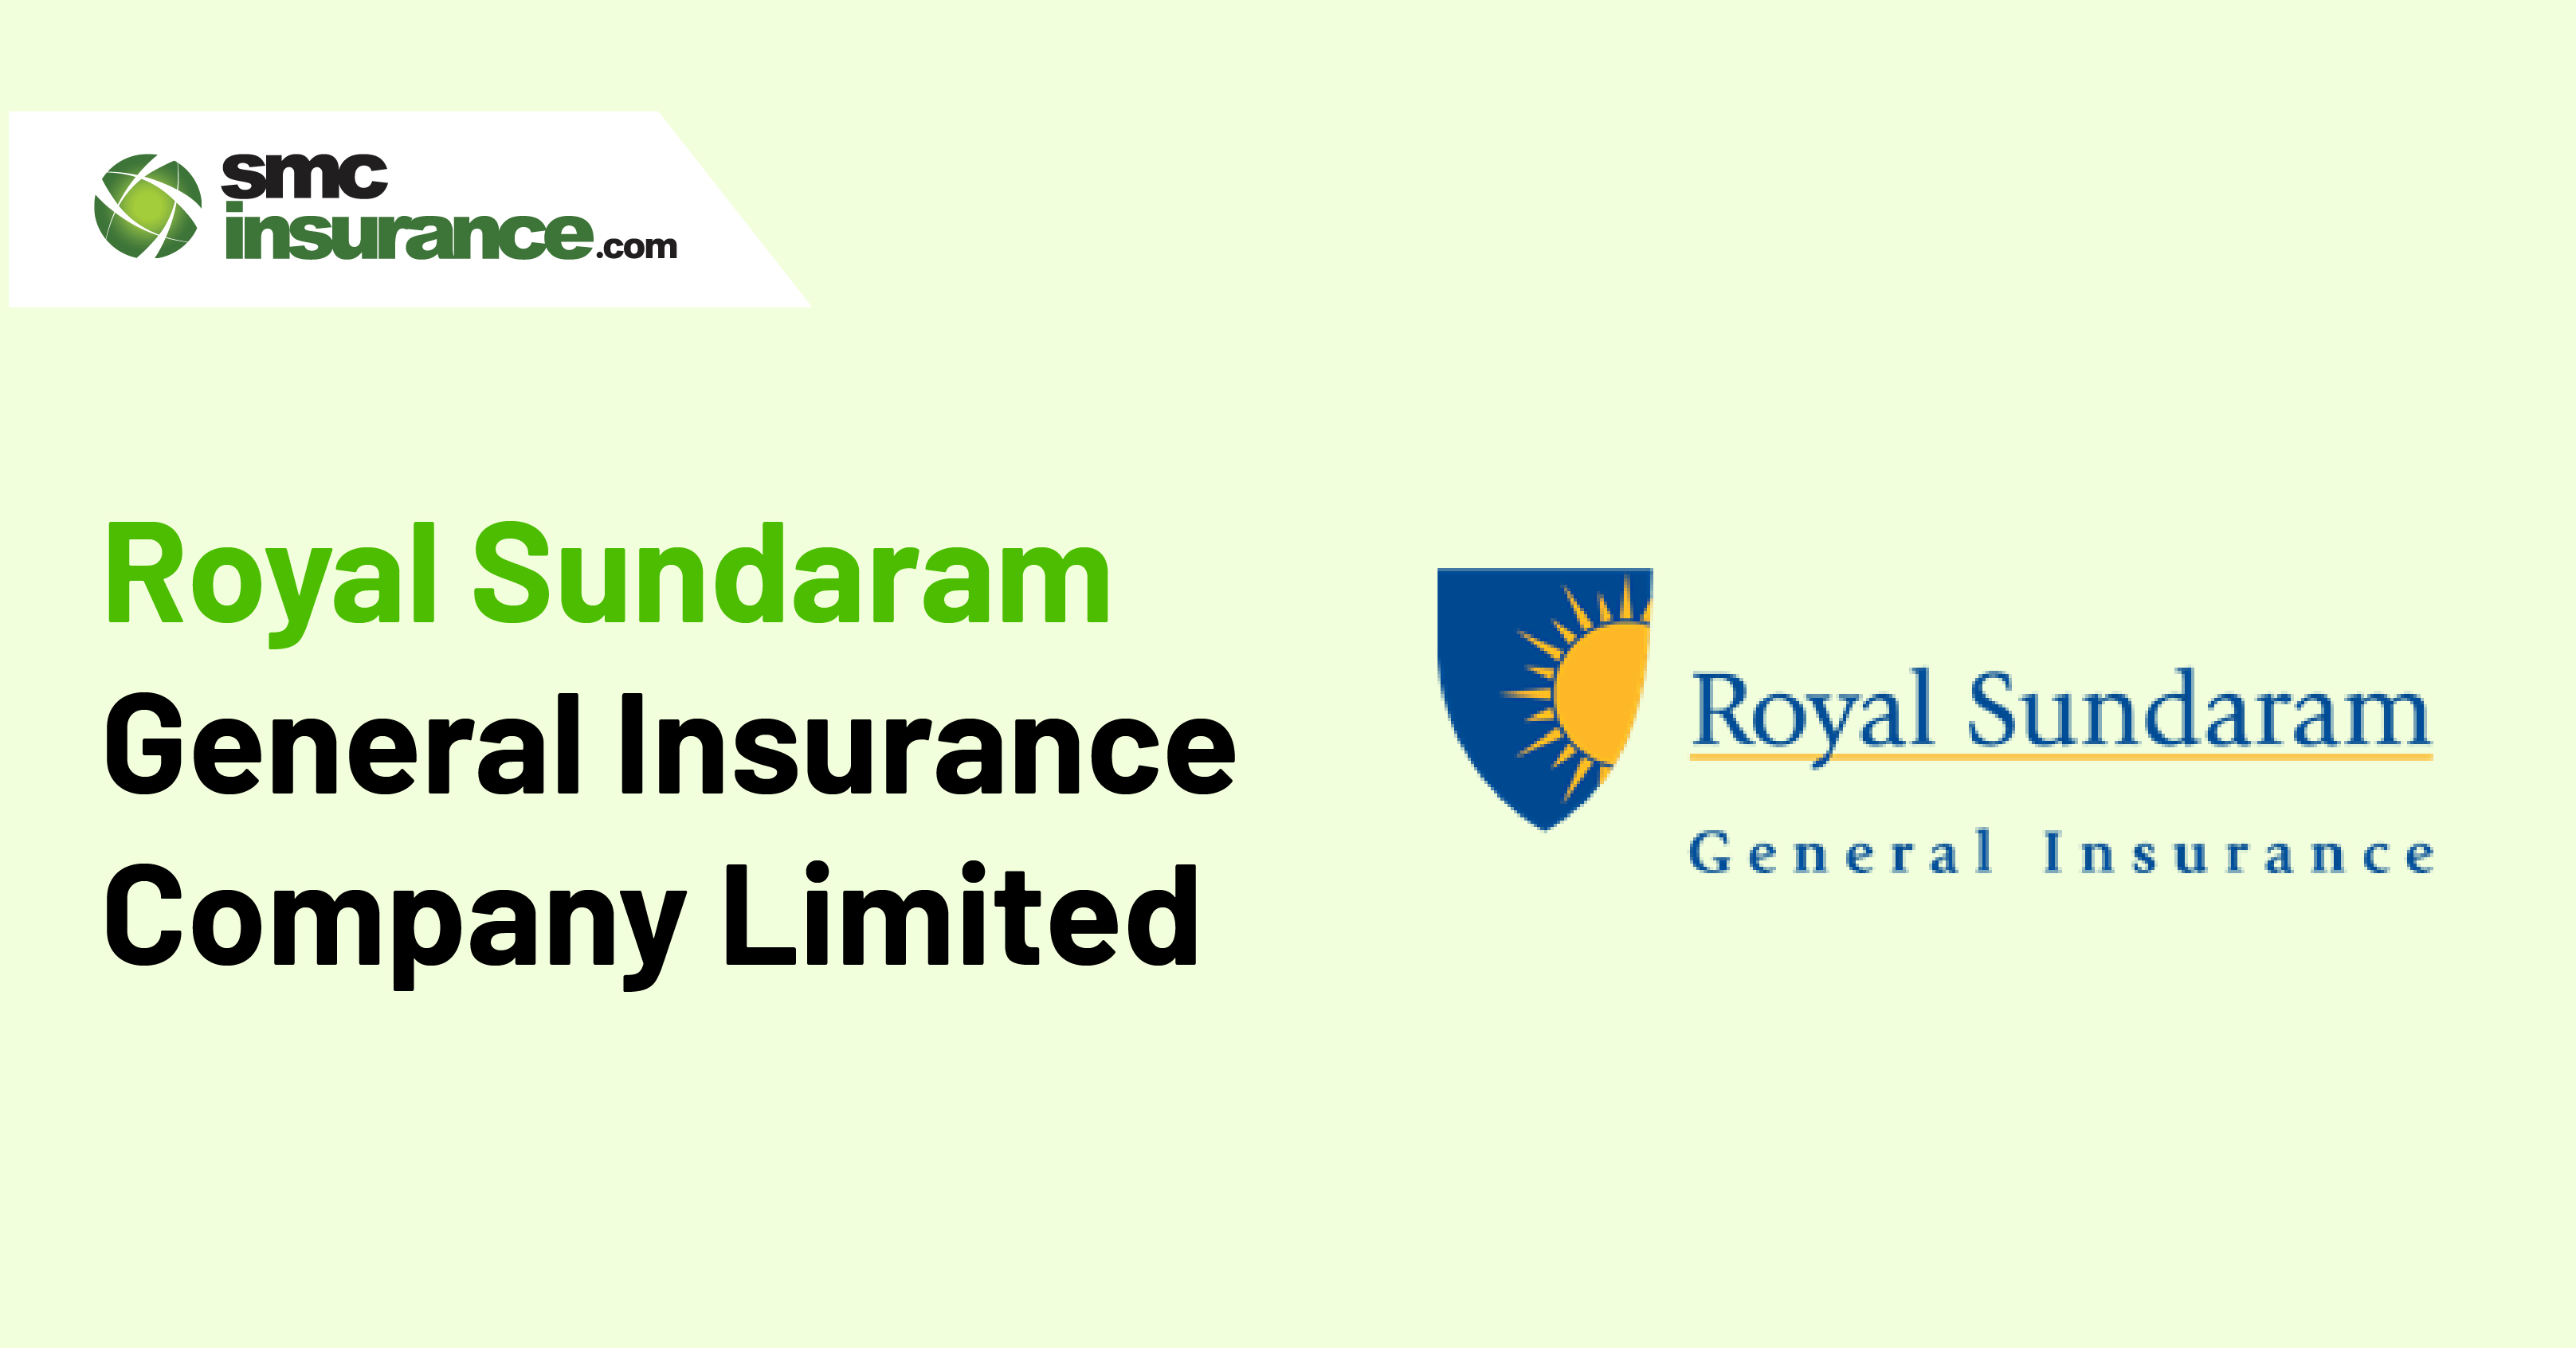 Royal Sundaram General Insurance Company Limited